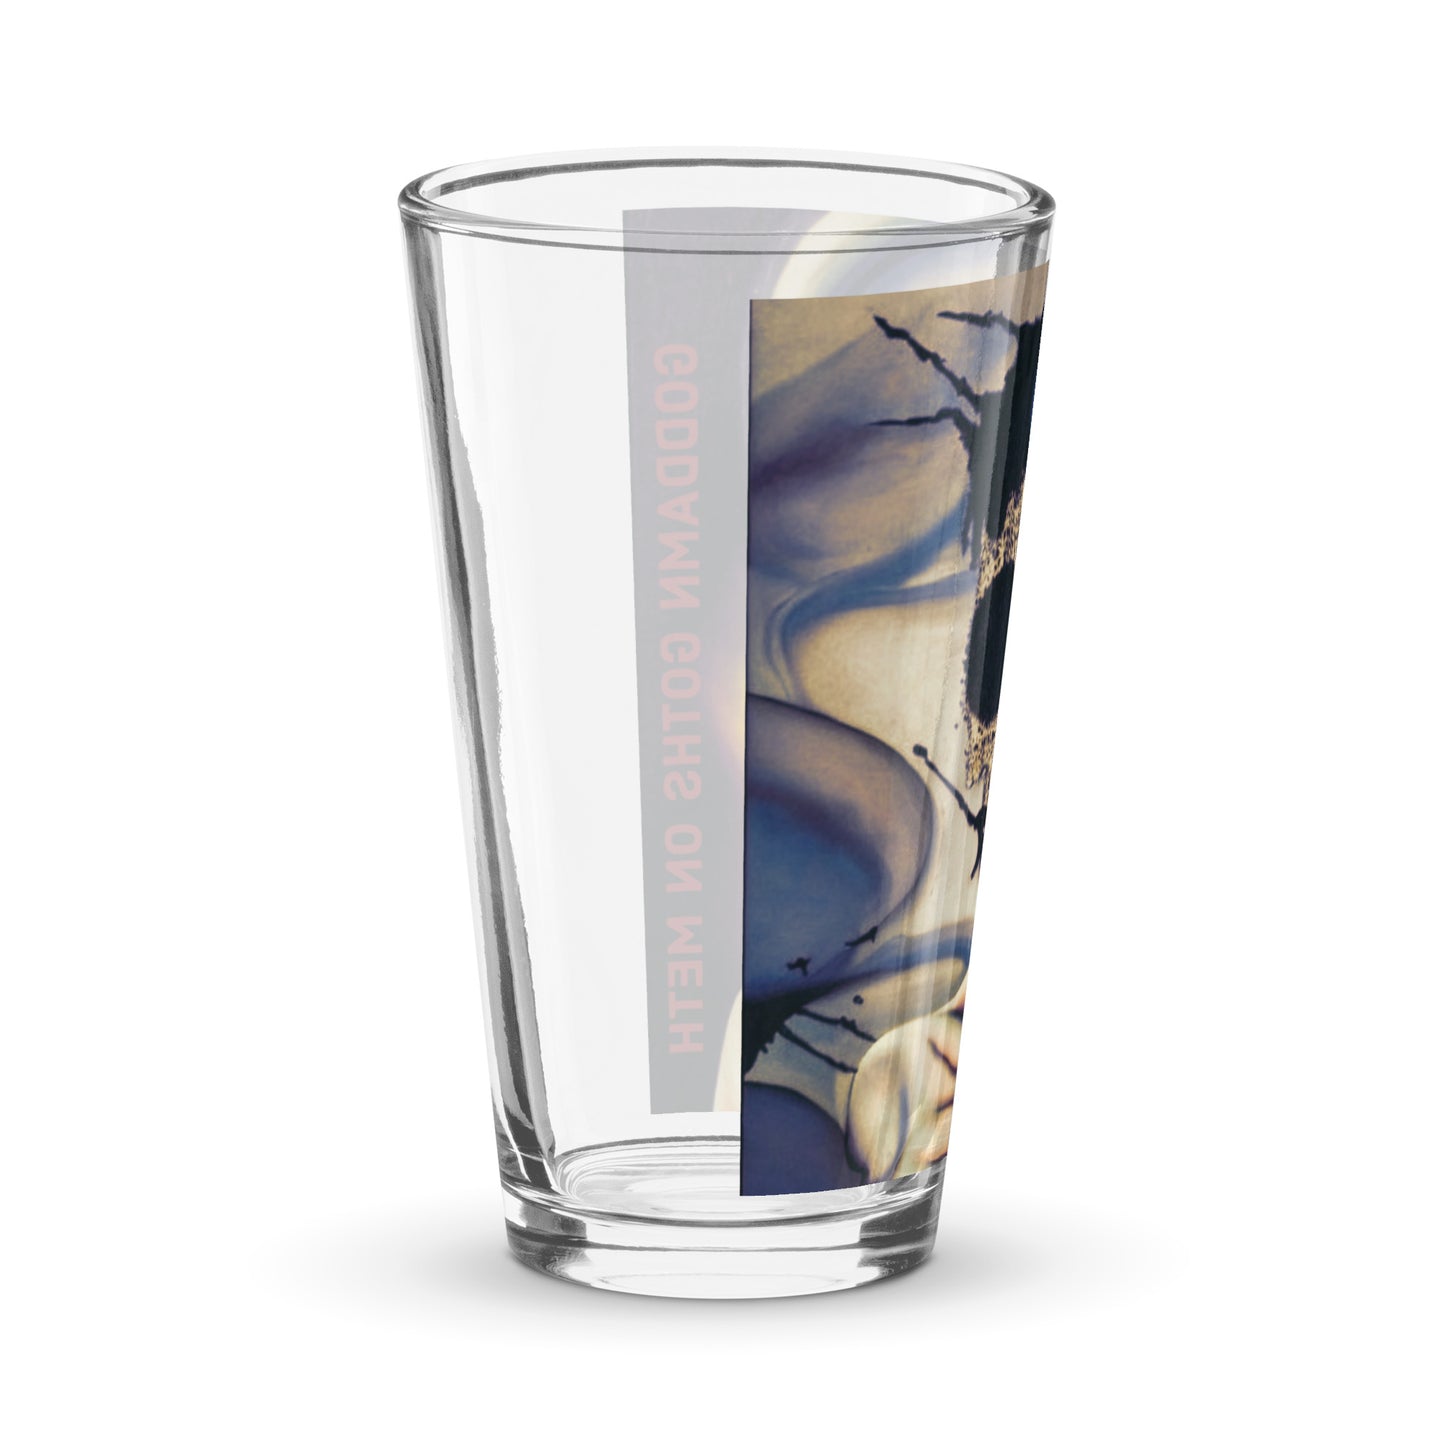 X- Shaker pint glass